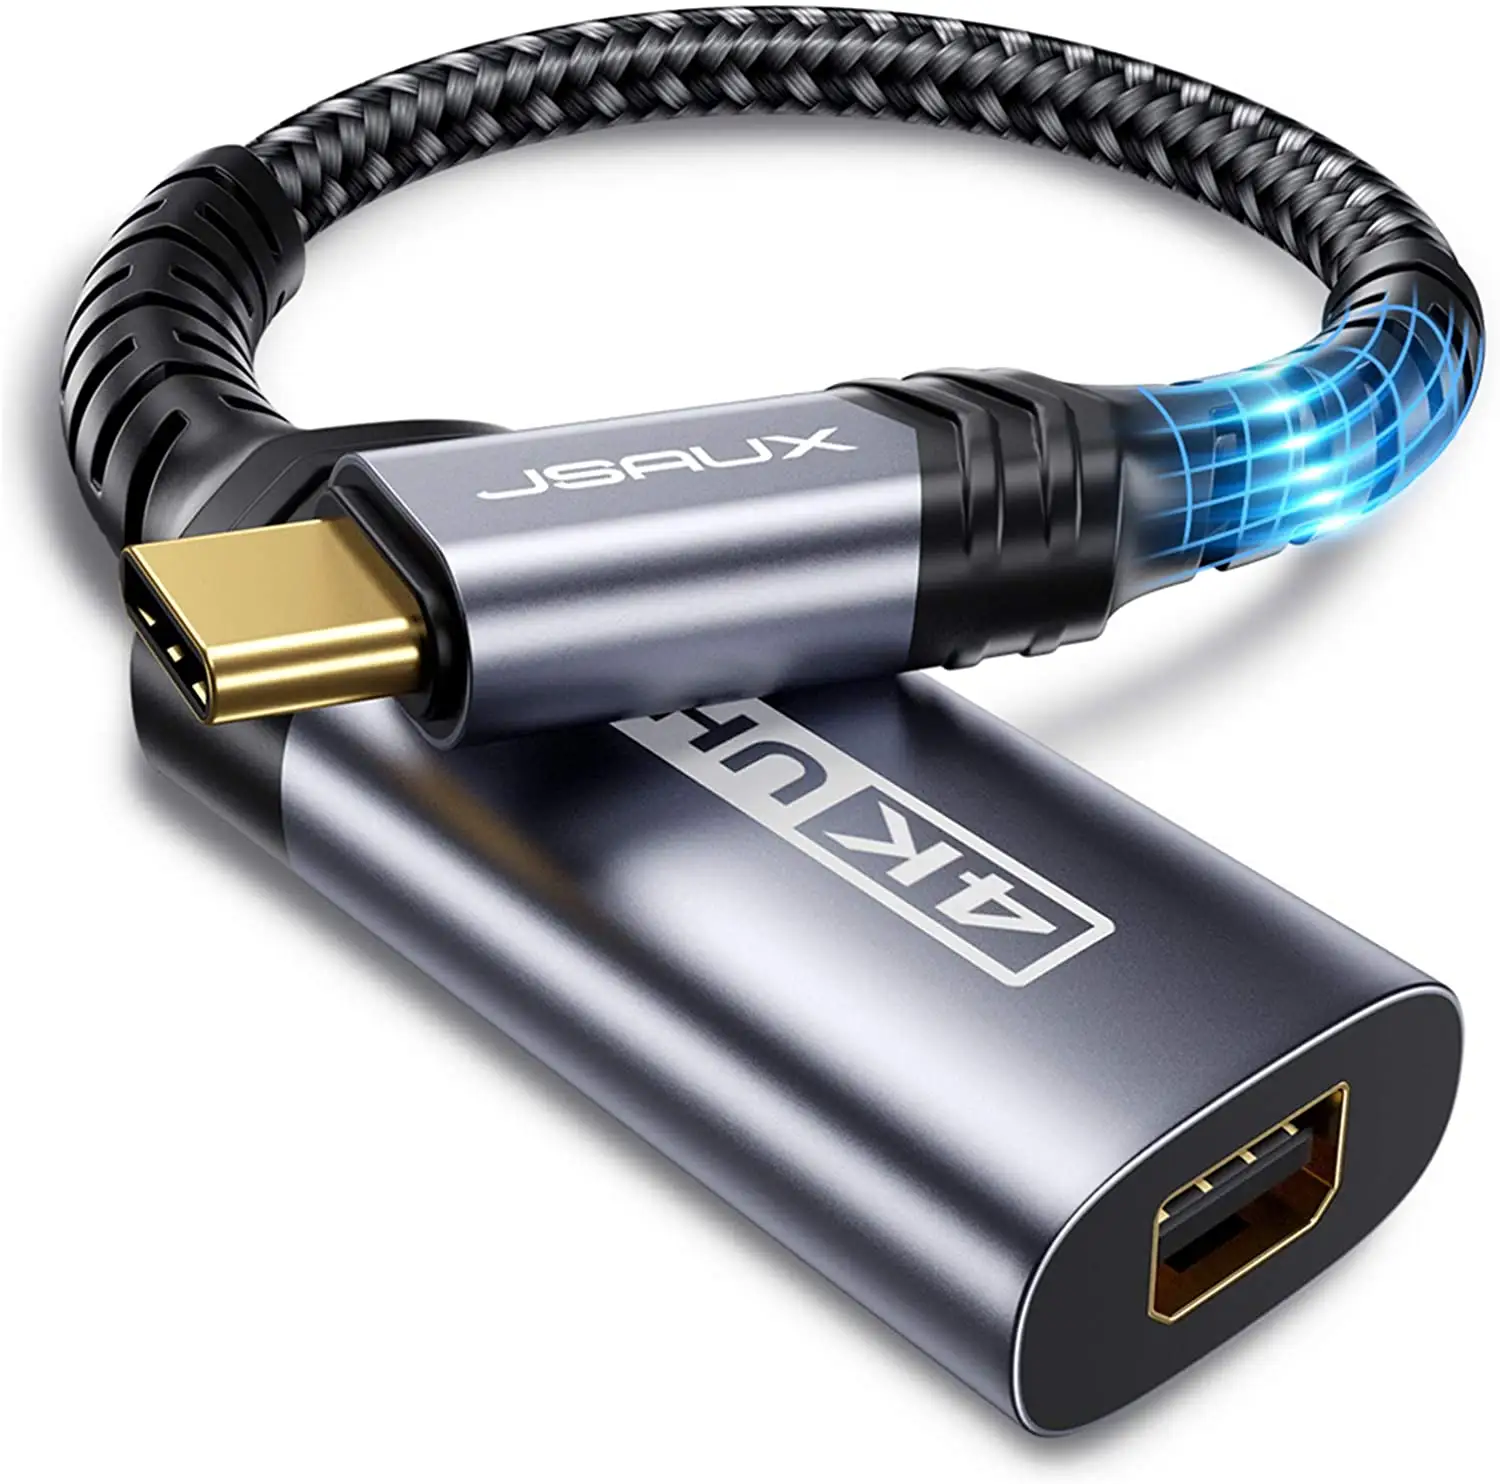 JSAUX USB Type C to Mini Display Port Adapter 4K@60Hz Mini Display Port Dongle Cable